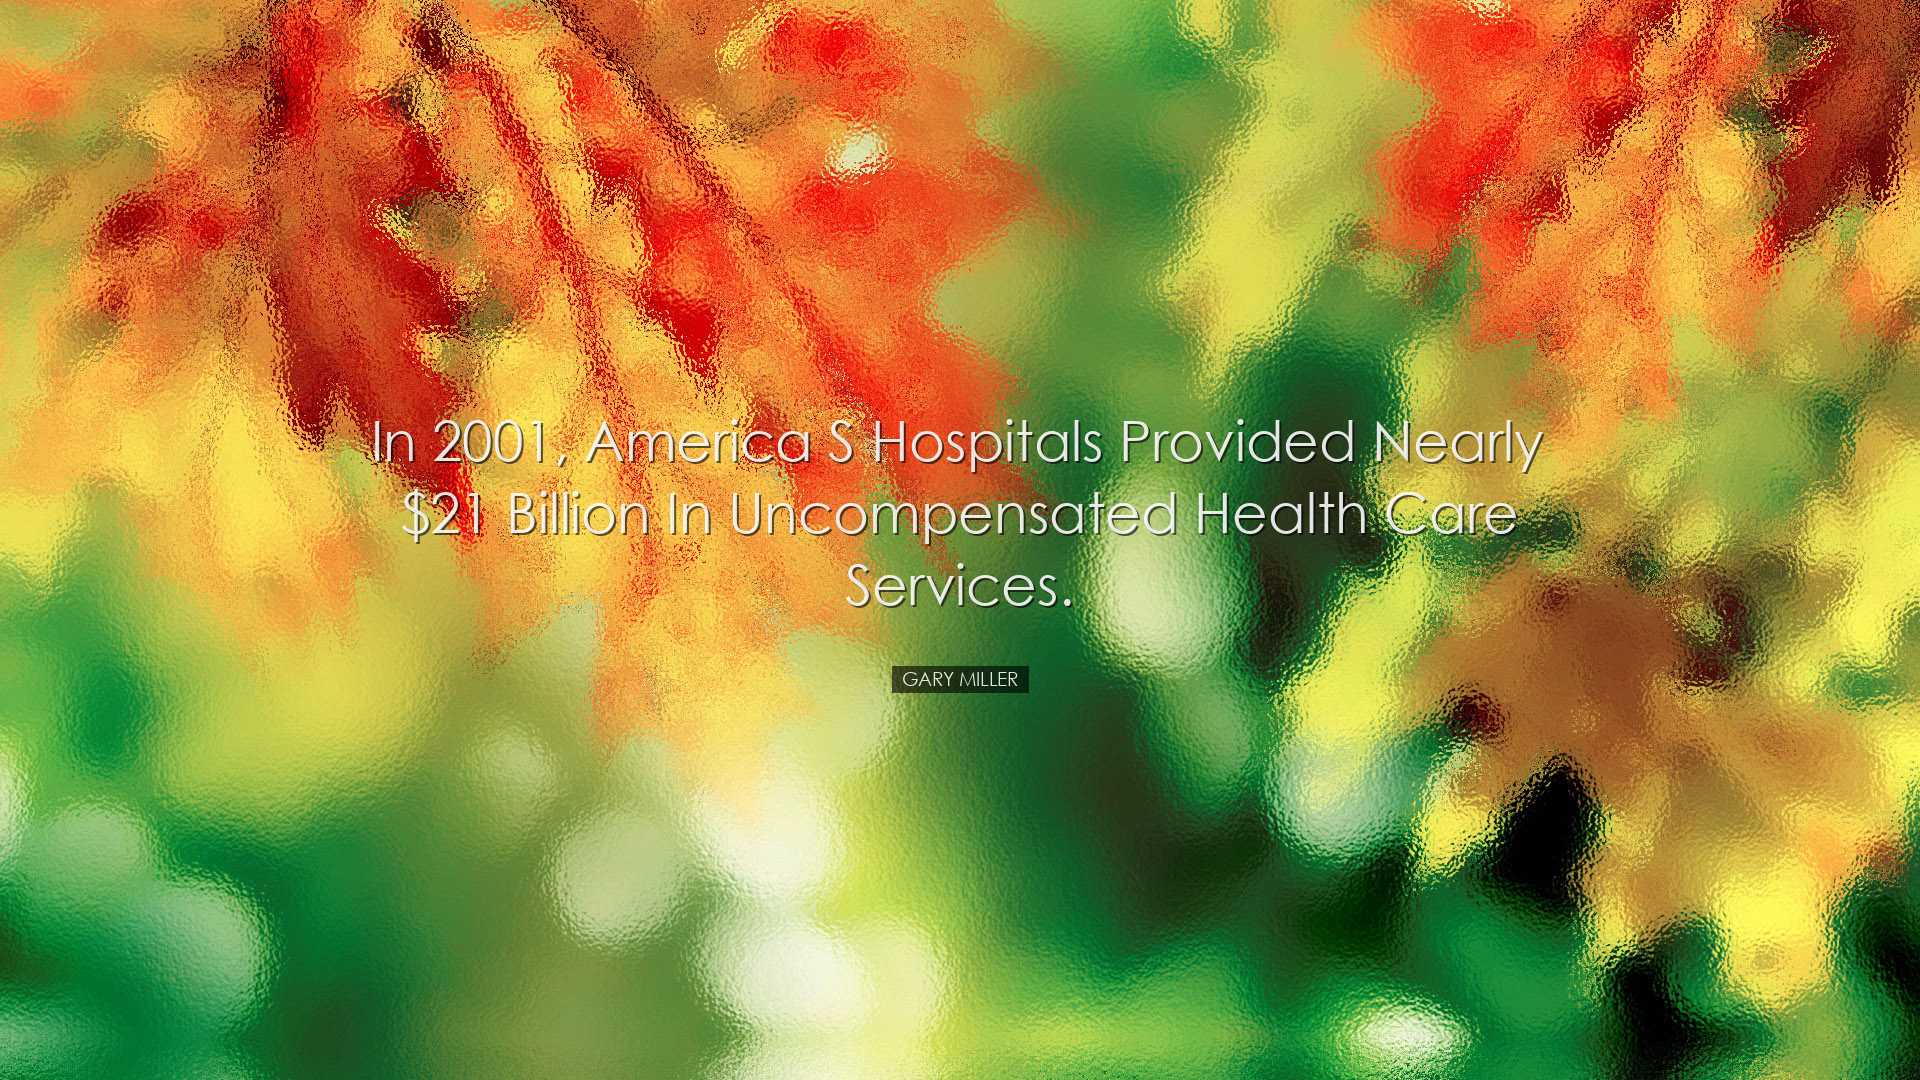 In 2001, America s hospitals provided nearly $21 billion in uncomp